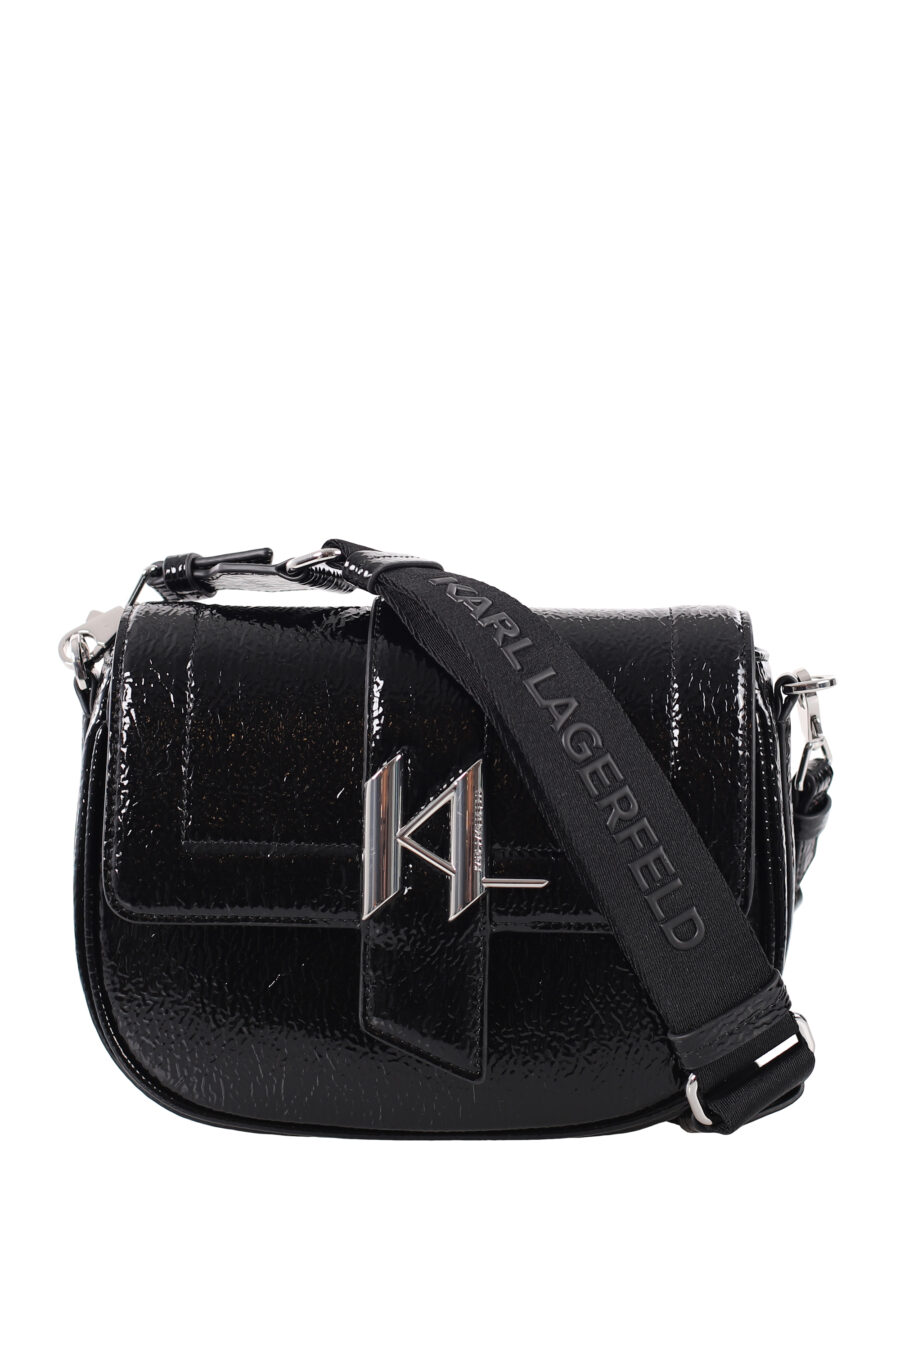 Small black flap shoulder bag with metal logo - IMG 1703